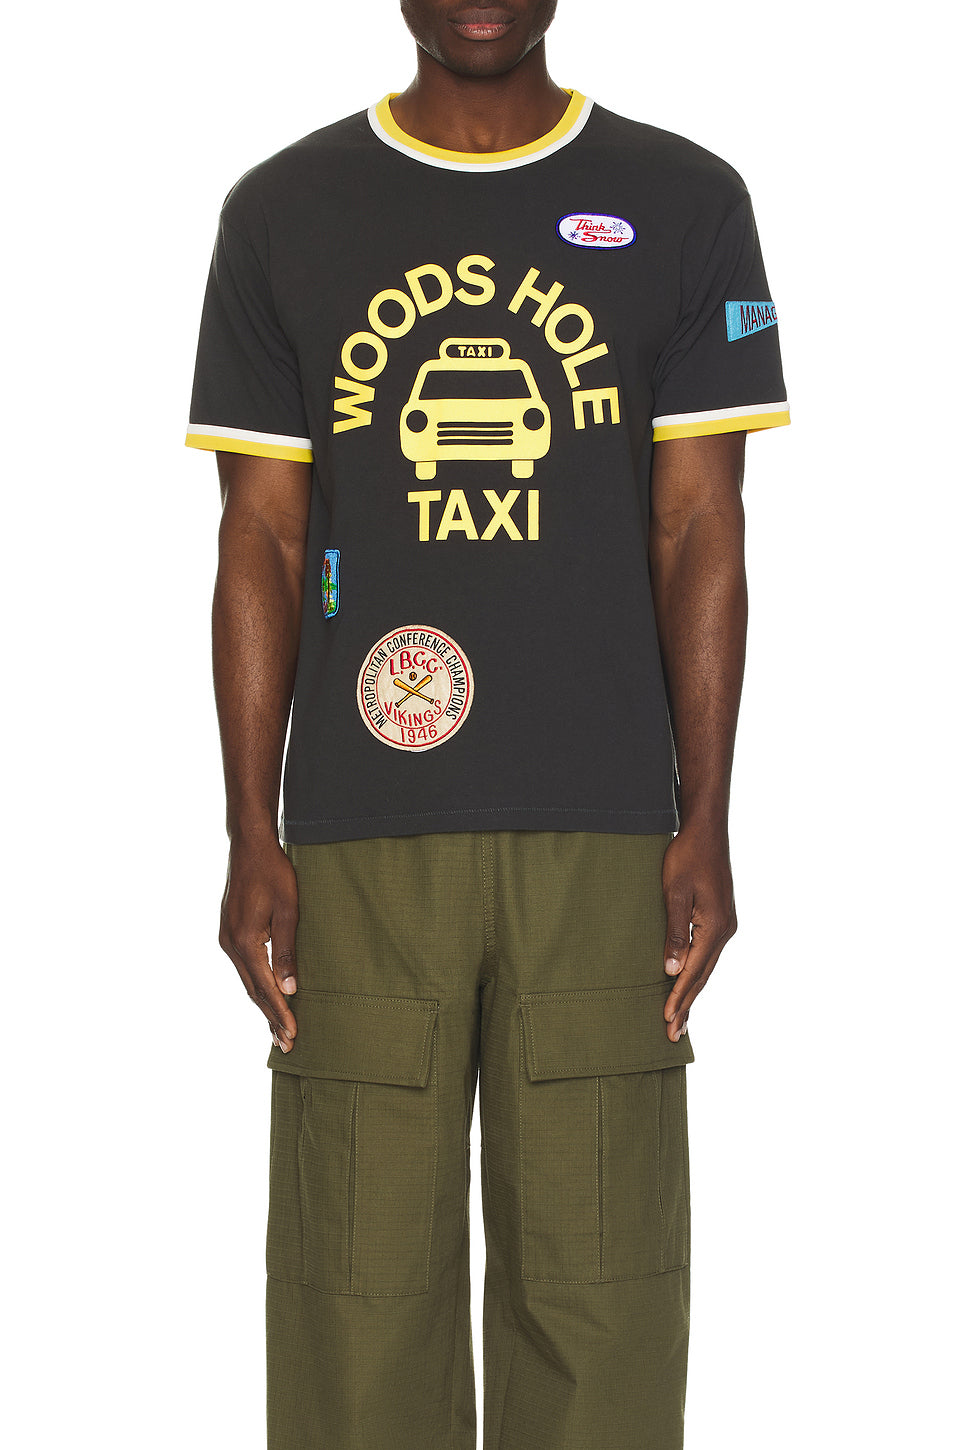 Discount Taxi Short Sleeve T-shirt